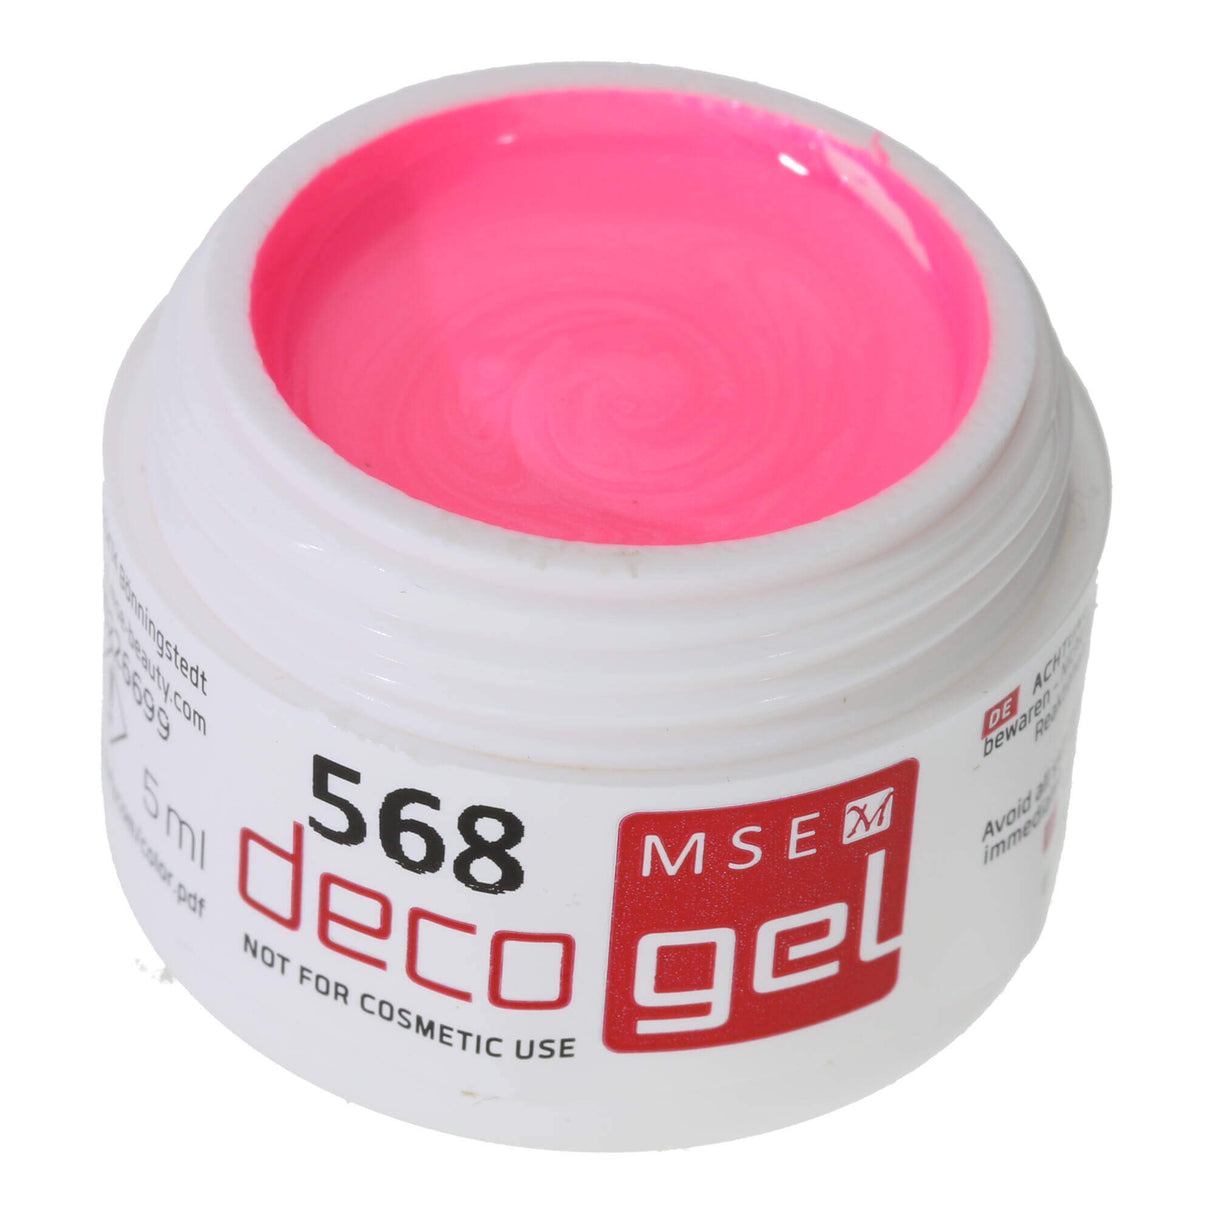 #568 Premium DEKO Color Gel 5ml Neon KHÔNG DÙNG CHO MỸ PHẨM